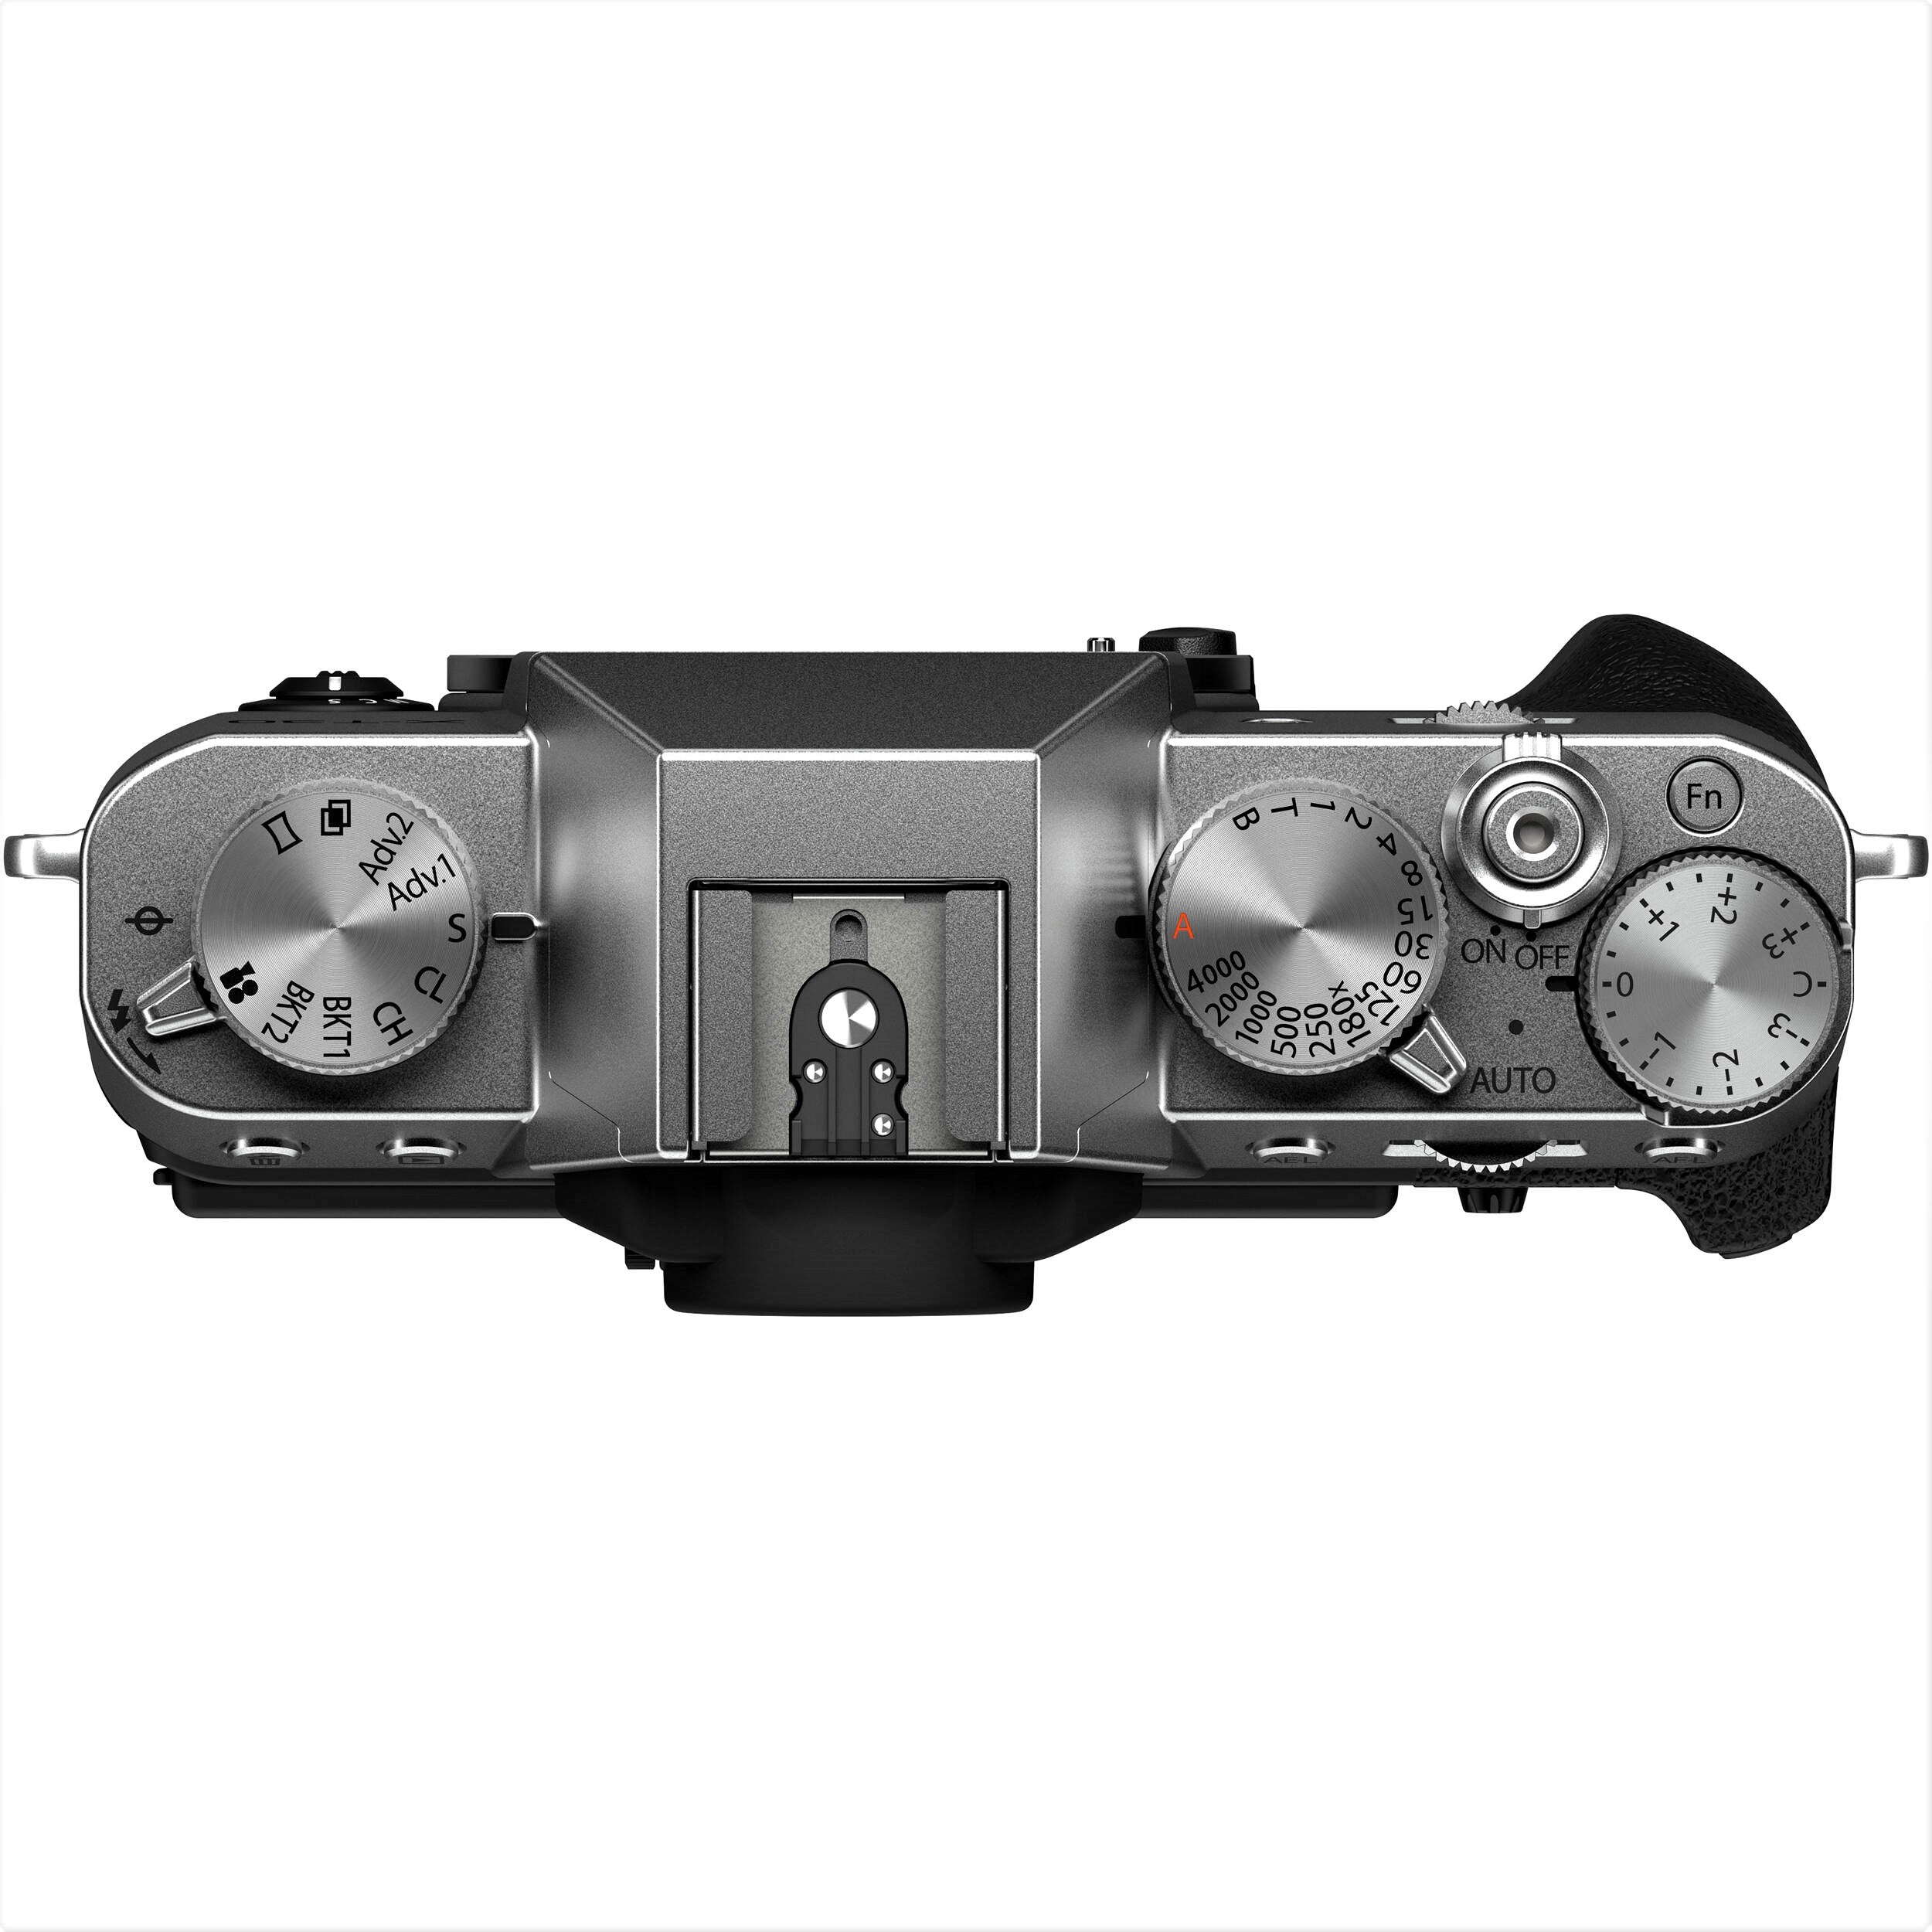 Fujifilm X-T30 II Mirrorless Camera (Silver) - Top View